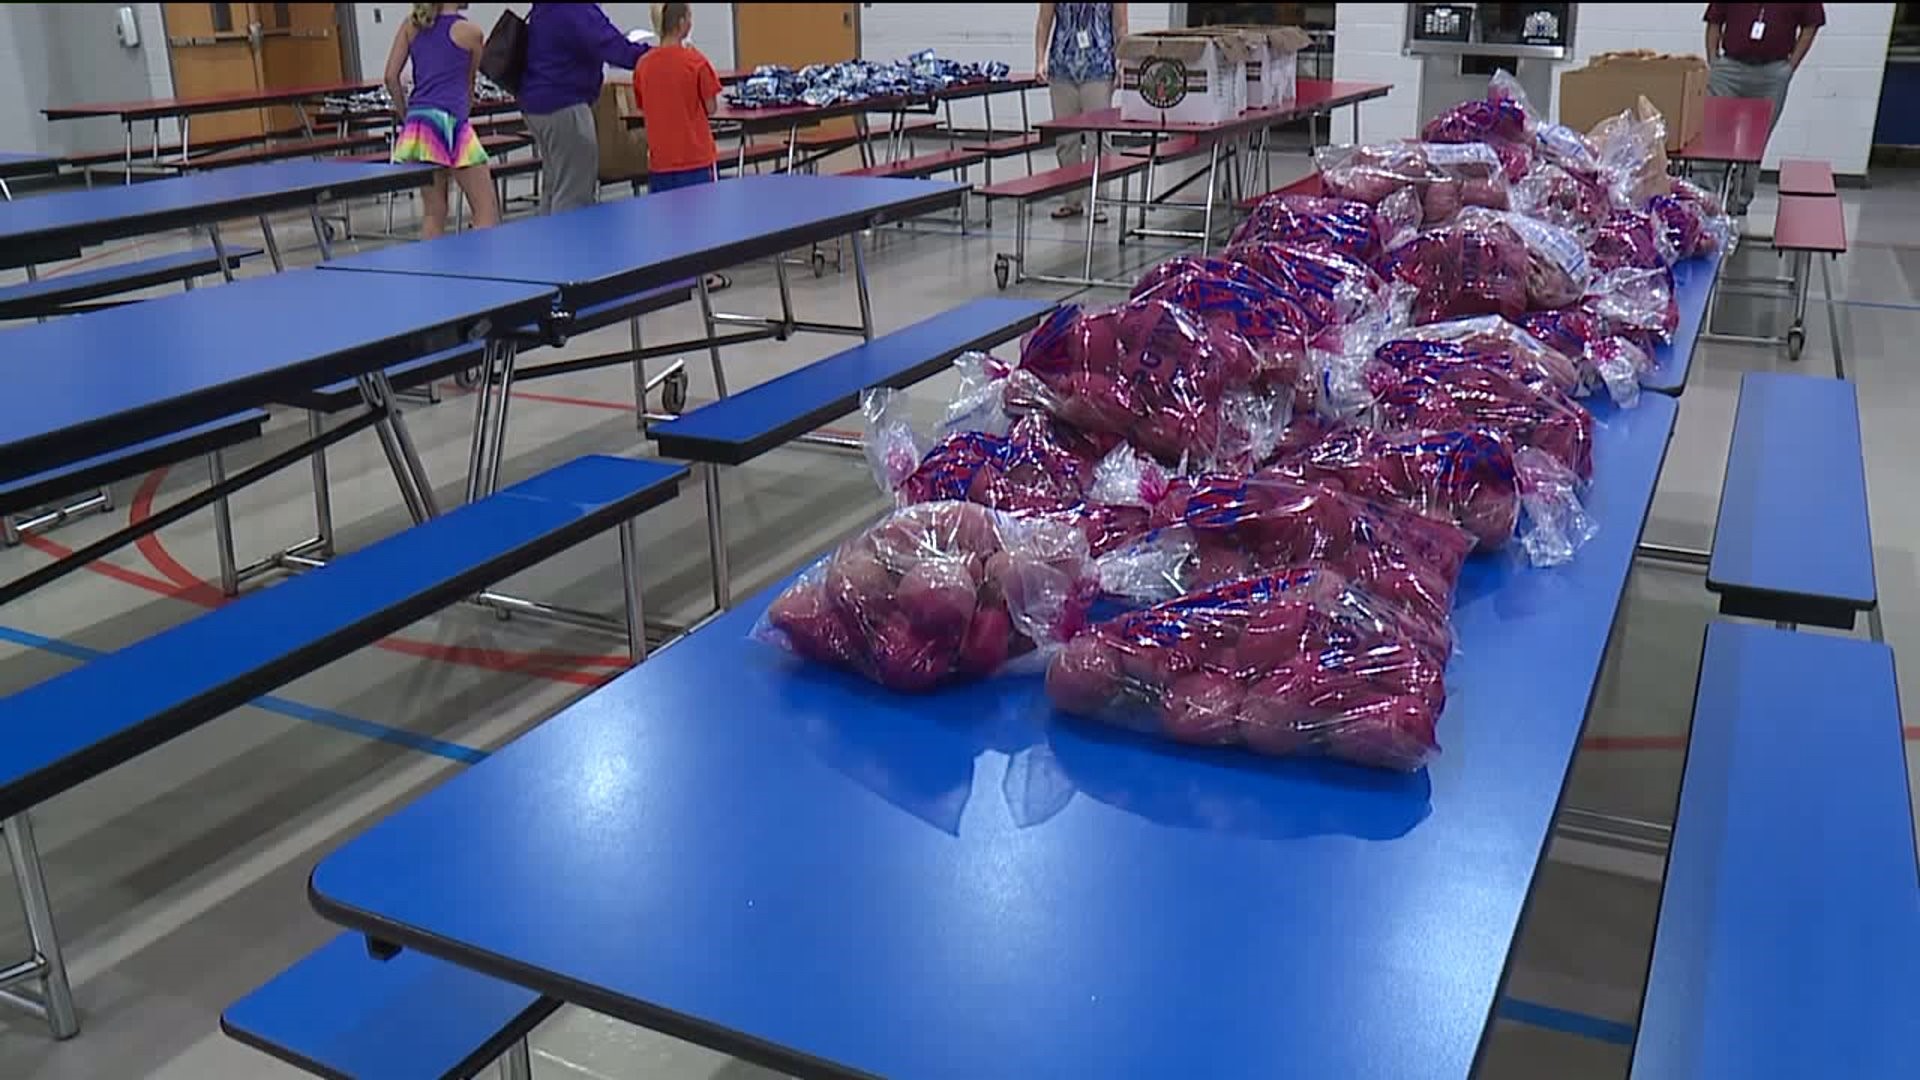 Lackawanna County School Hosts Free Produce Market for Kids